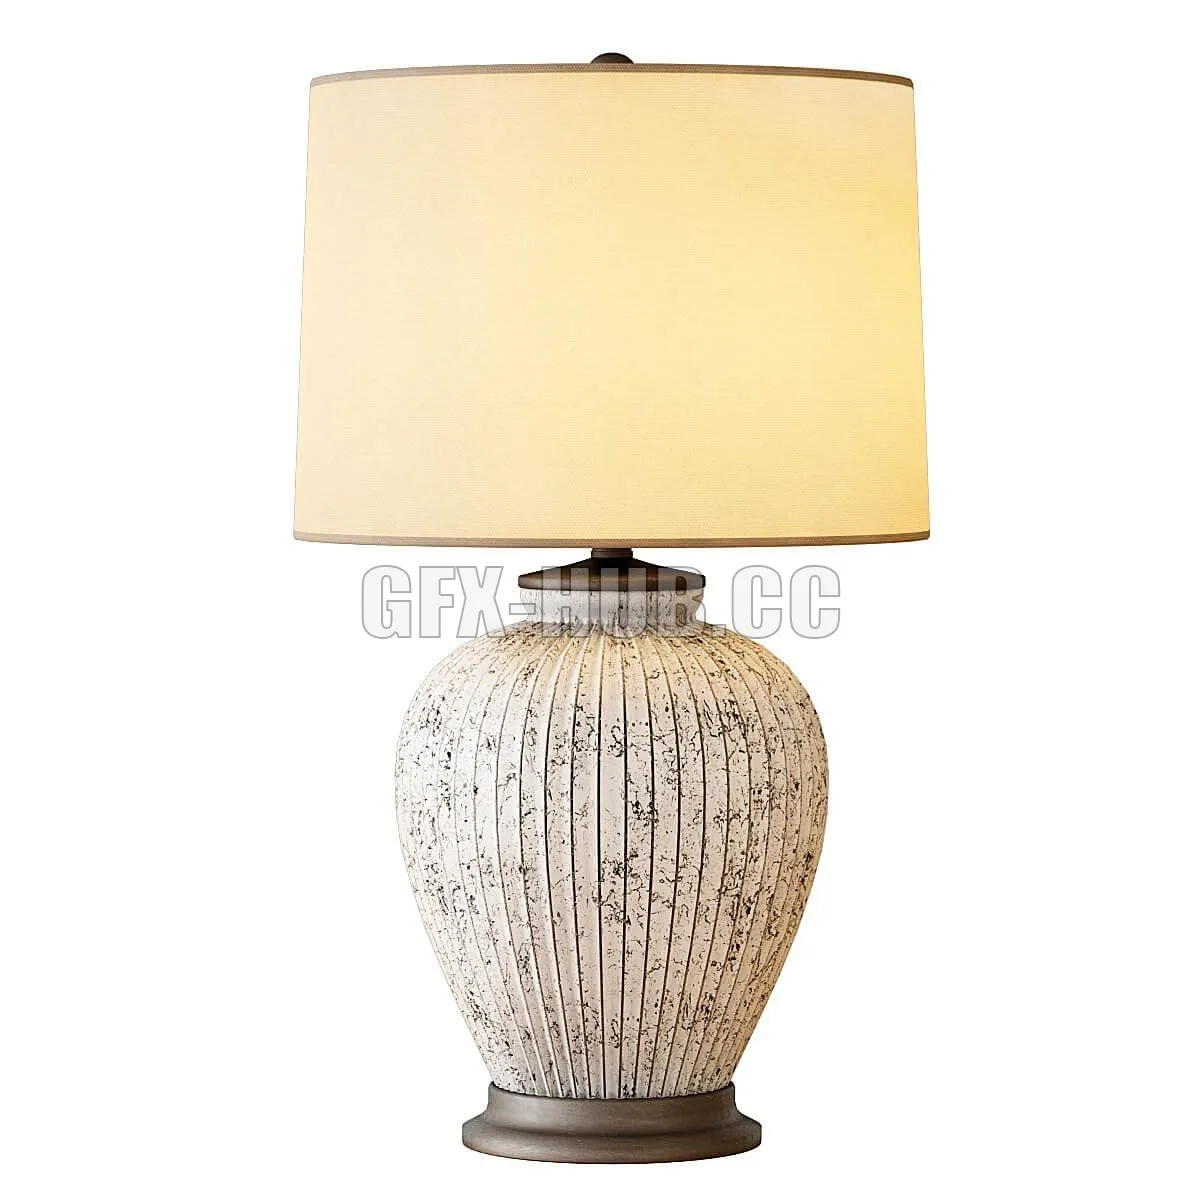 Richmond table lamp 3 – 223917